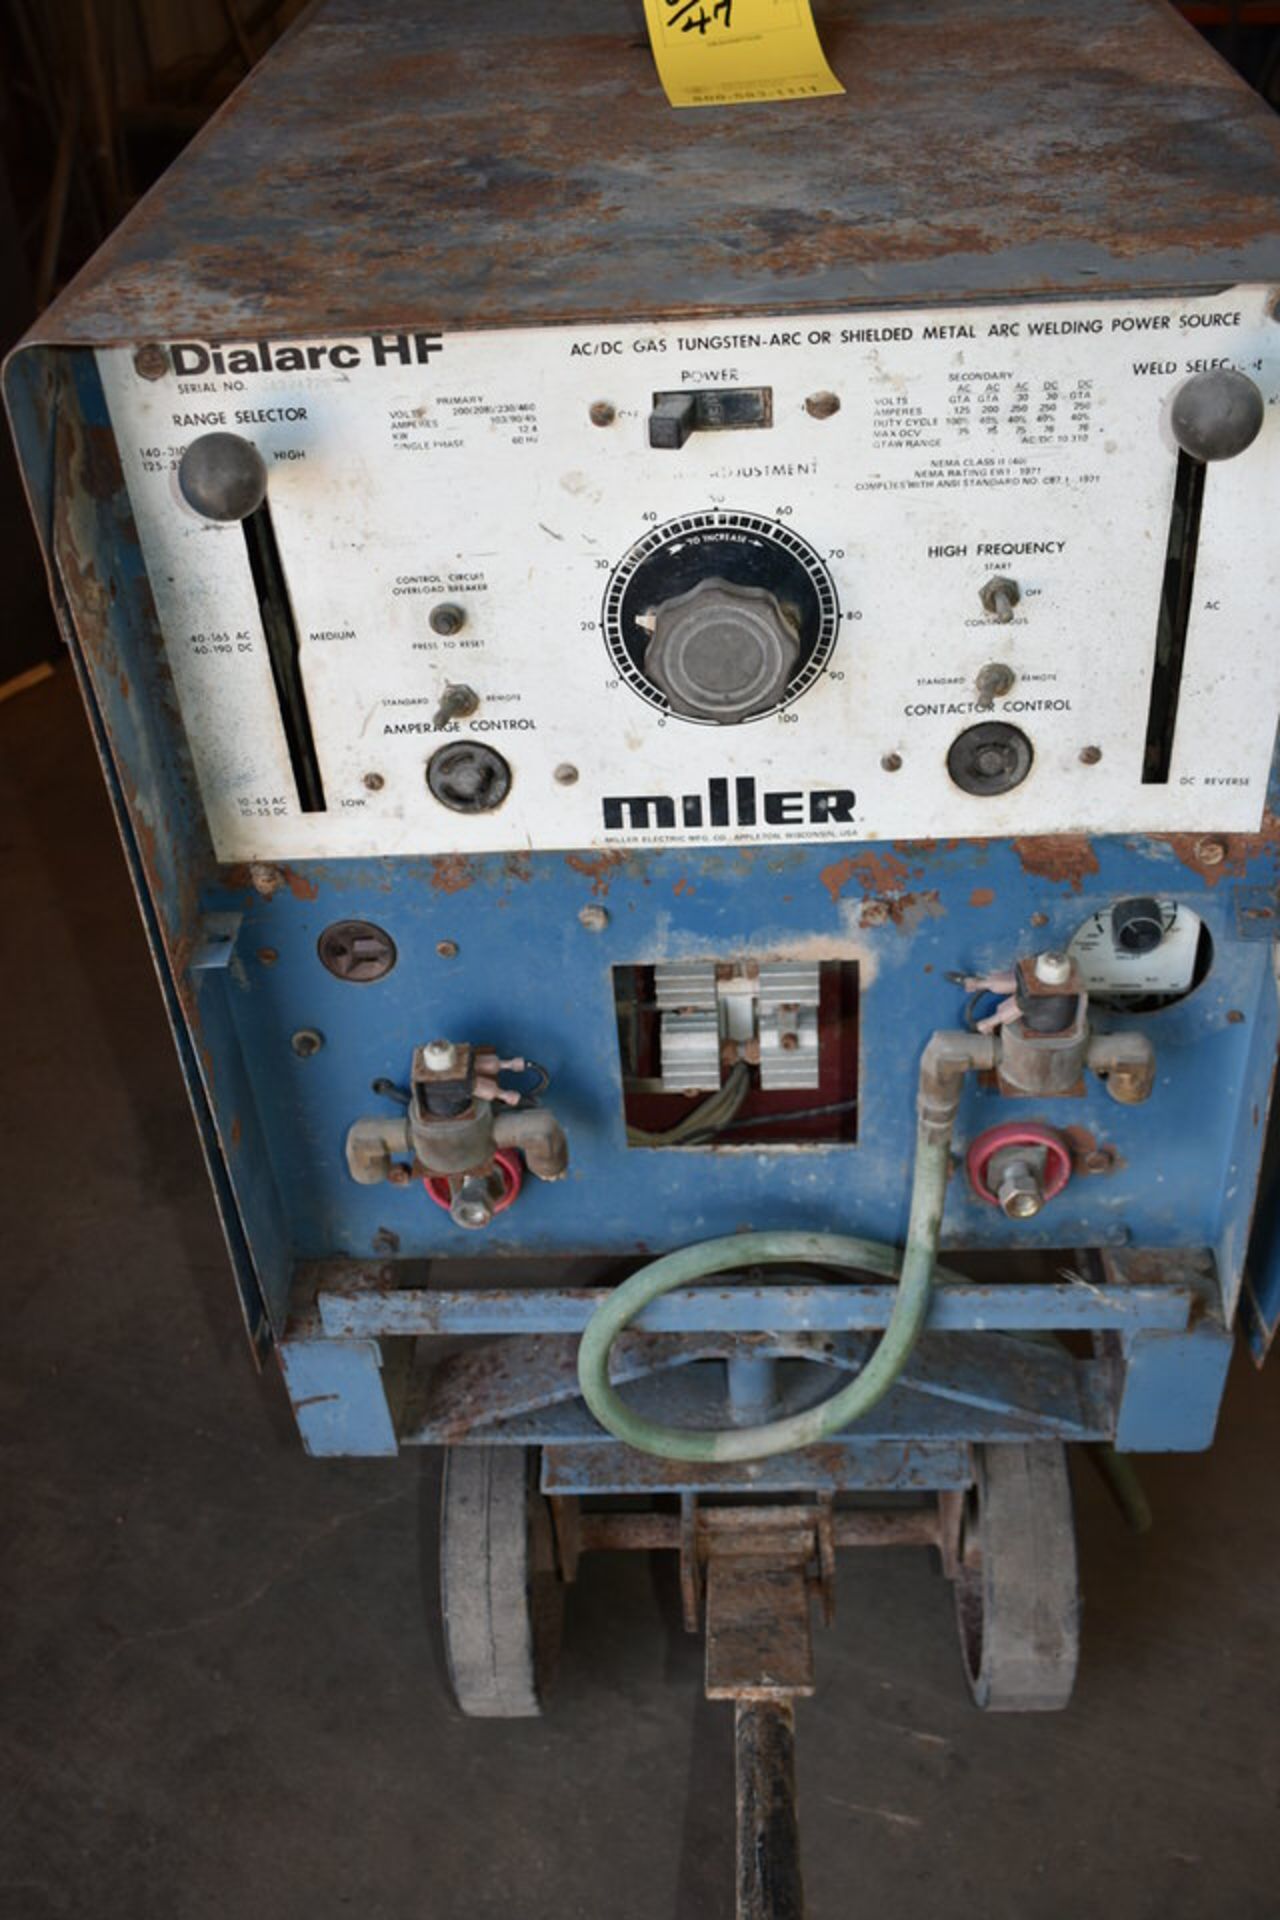 MILLER DIALARC 250 AC/DC, MILLER CP300, MILLER DIALARC HF WELDING POWERSOURCES - Image 4 of 4